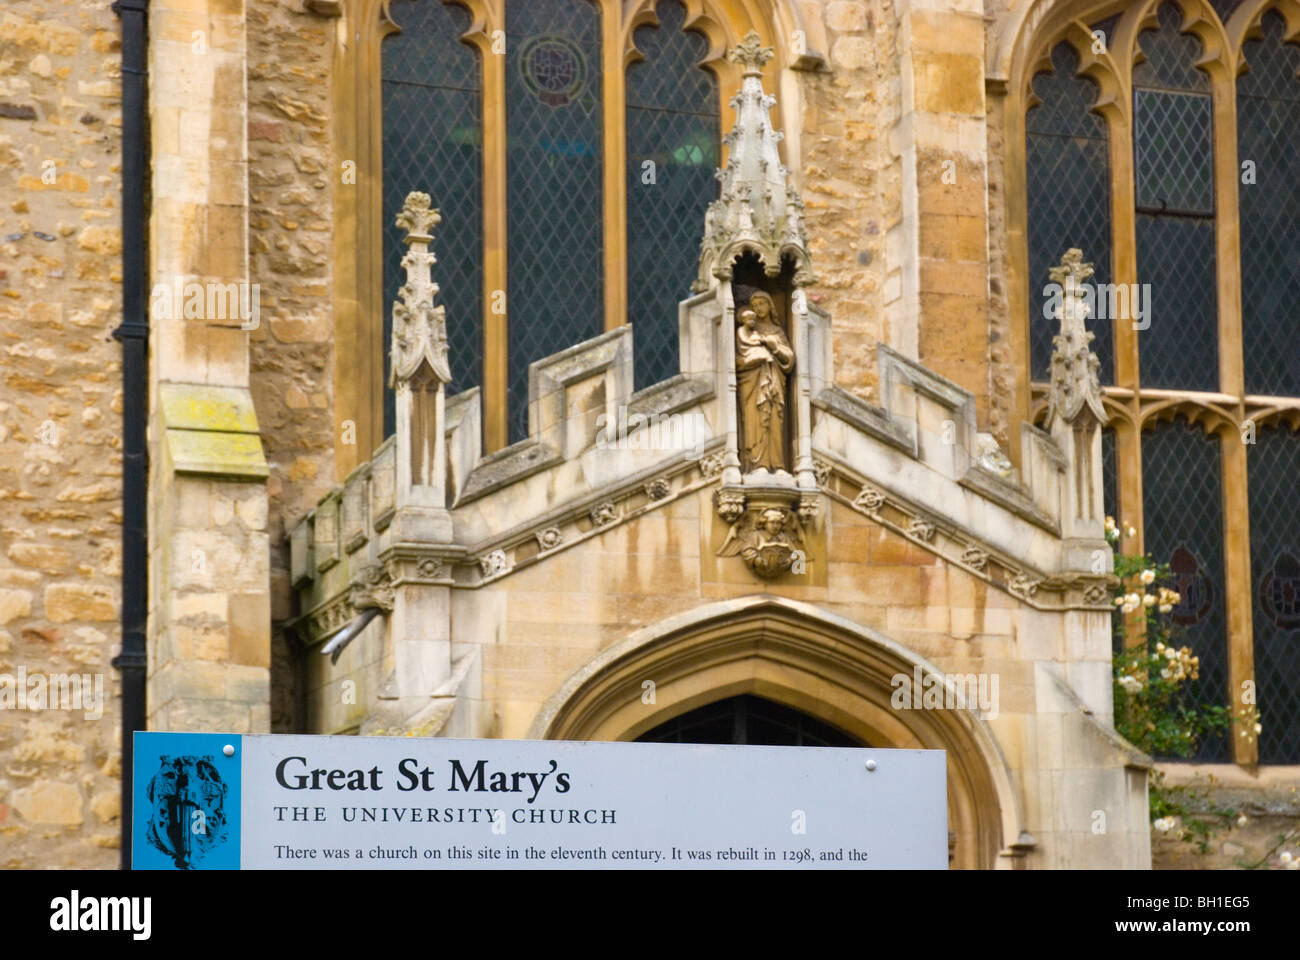 Great St Marys University Church sign and exterior Cambrdige England UK Europe Stock Photo